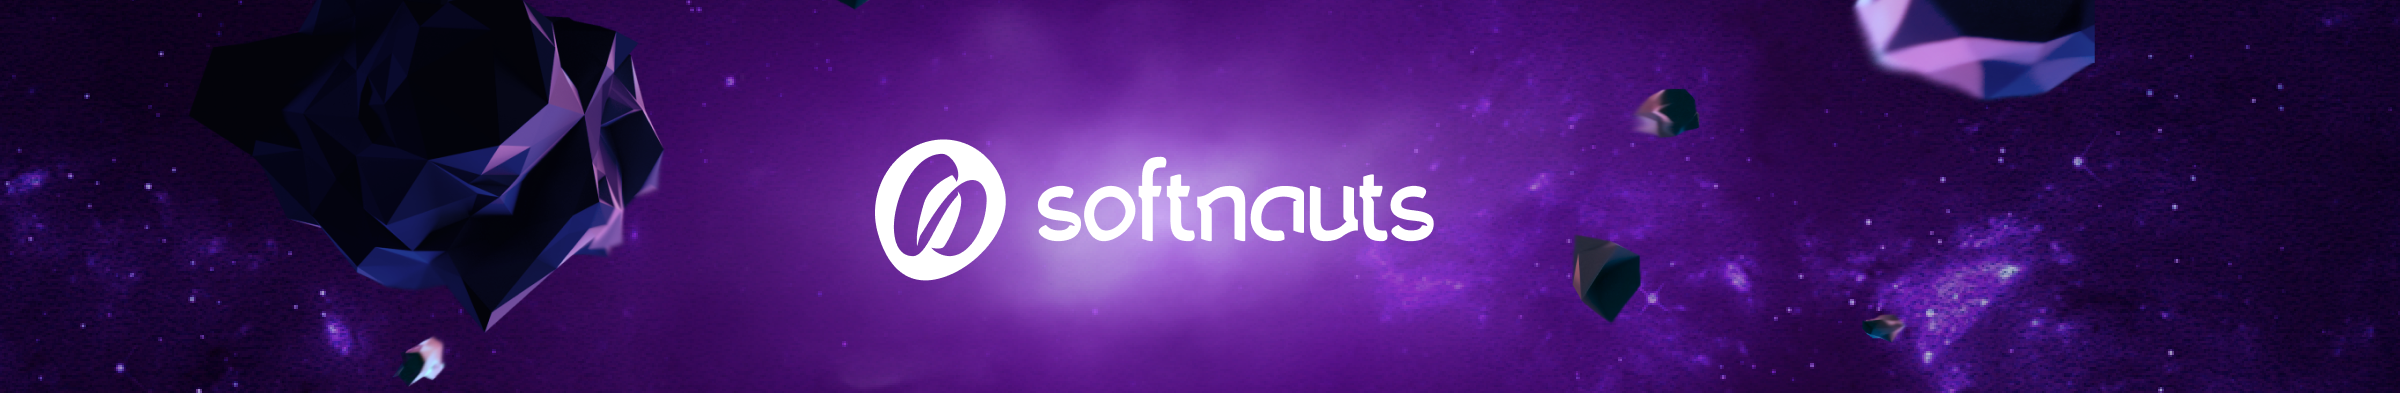 Softnauts - Software House Poland's profile banner